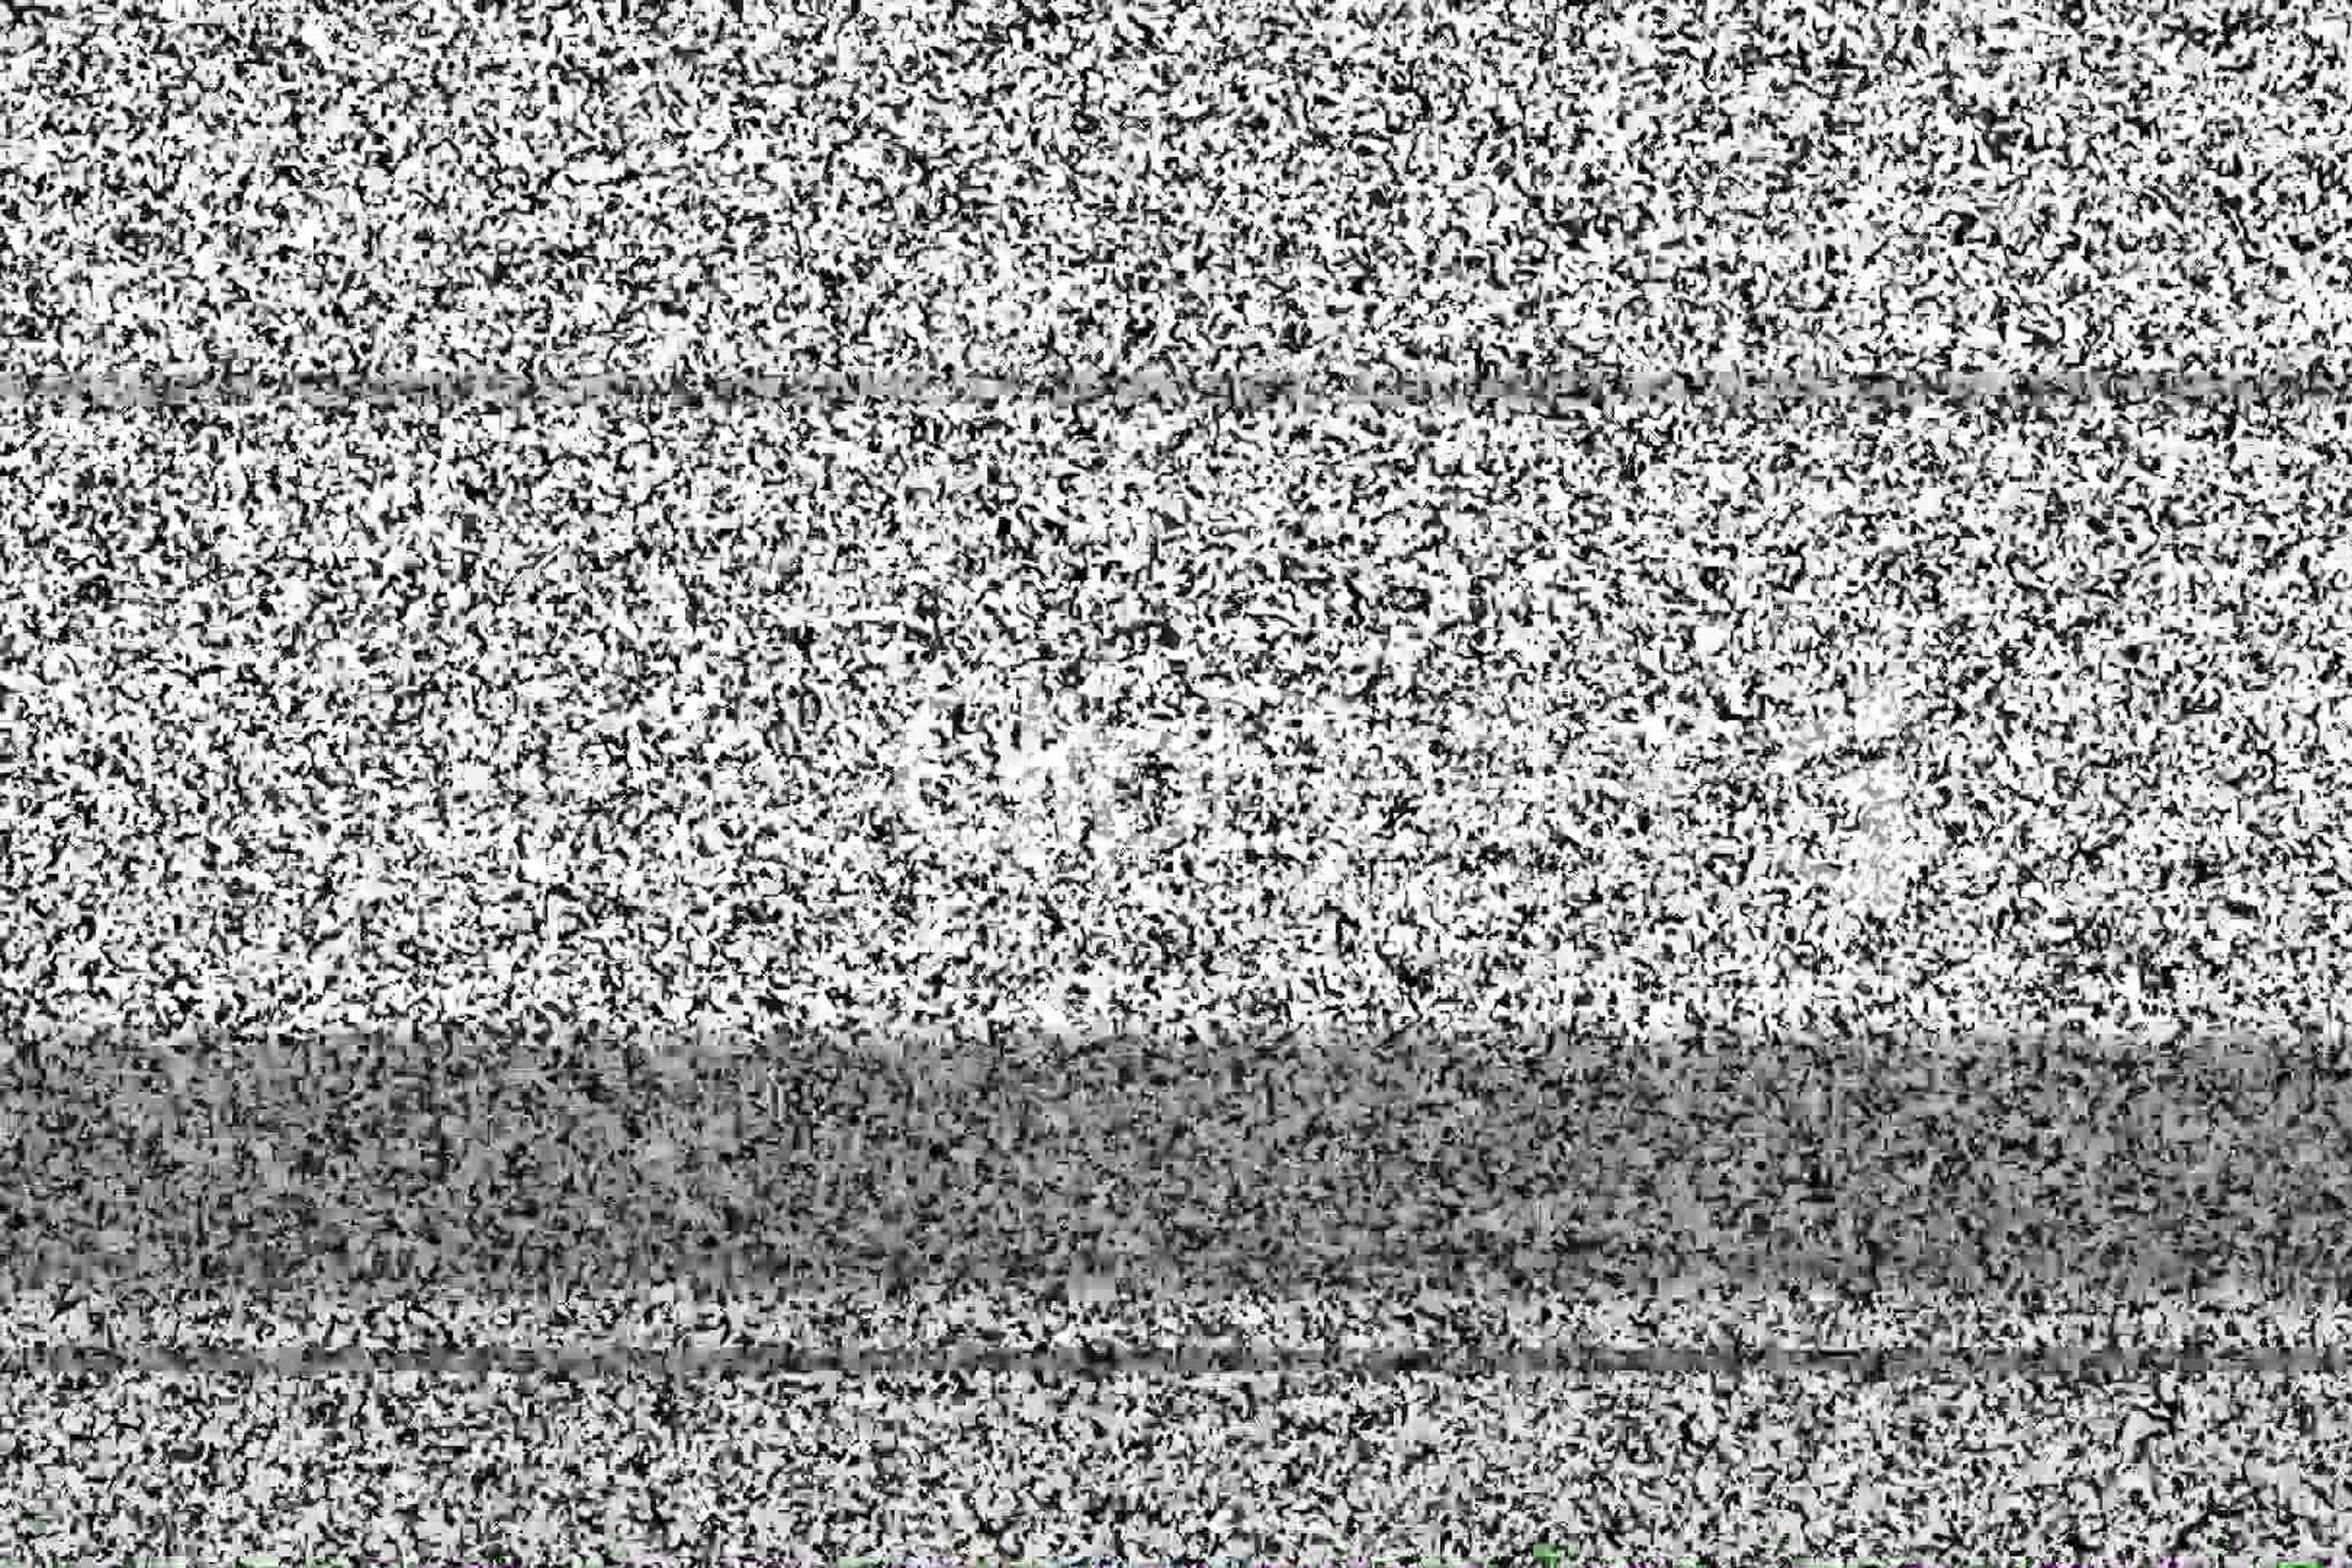 Помехи запись. Помехи на телевизоре. Белый шум телевизора. Серый экран телевизора. Помехи черно белые.